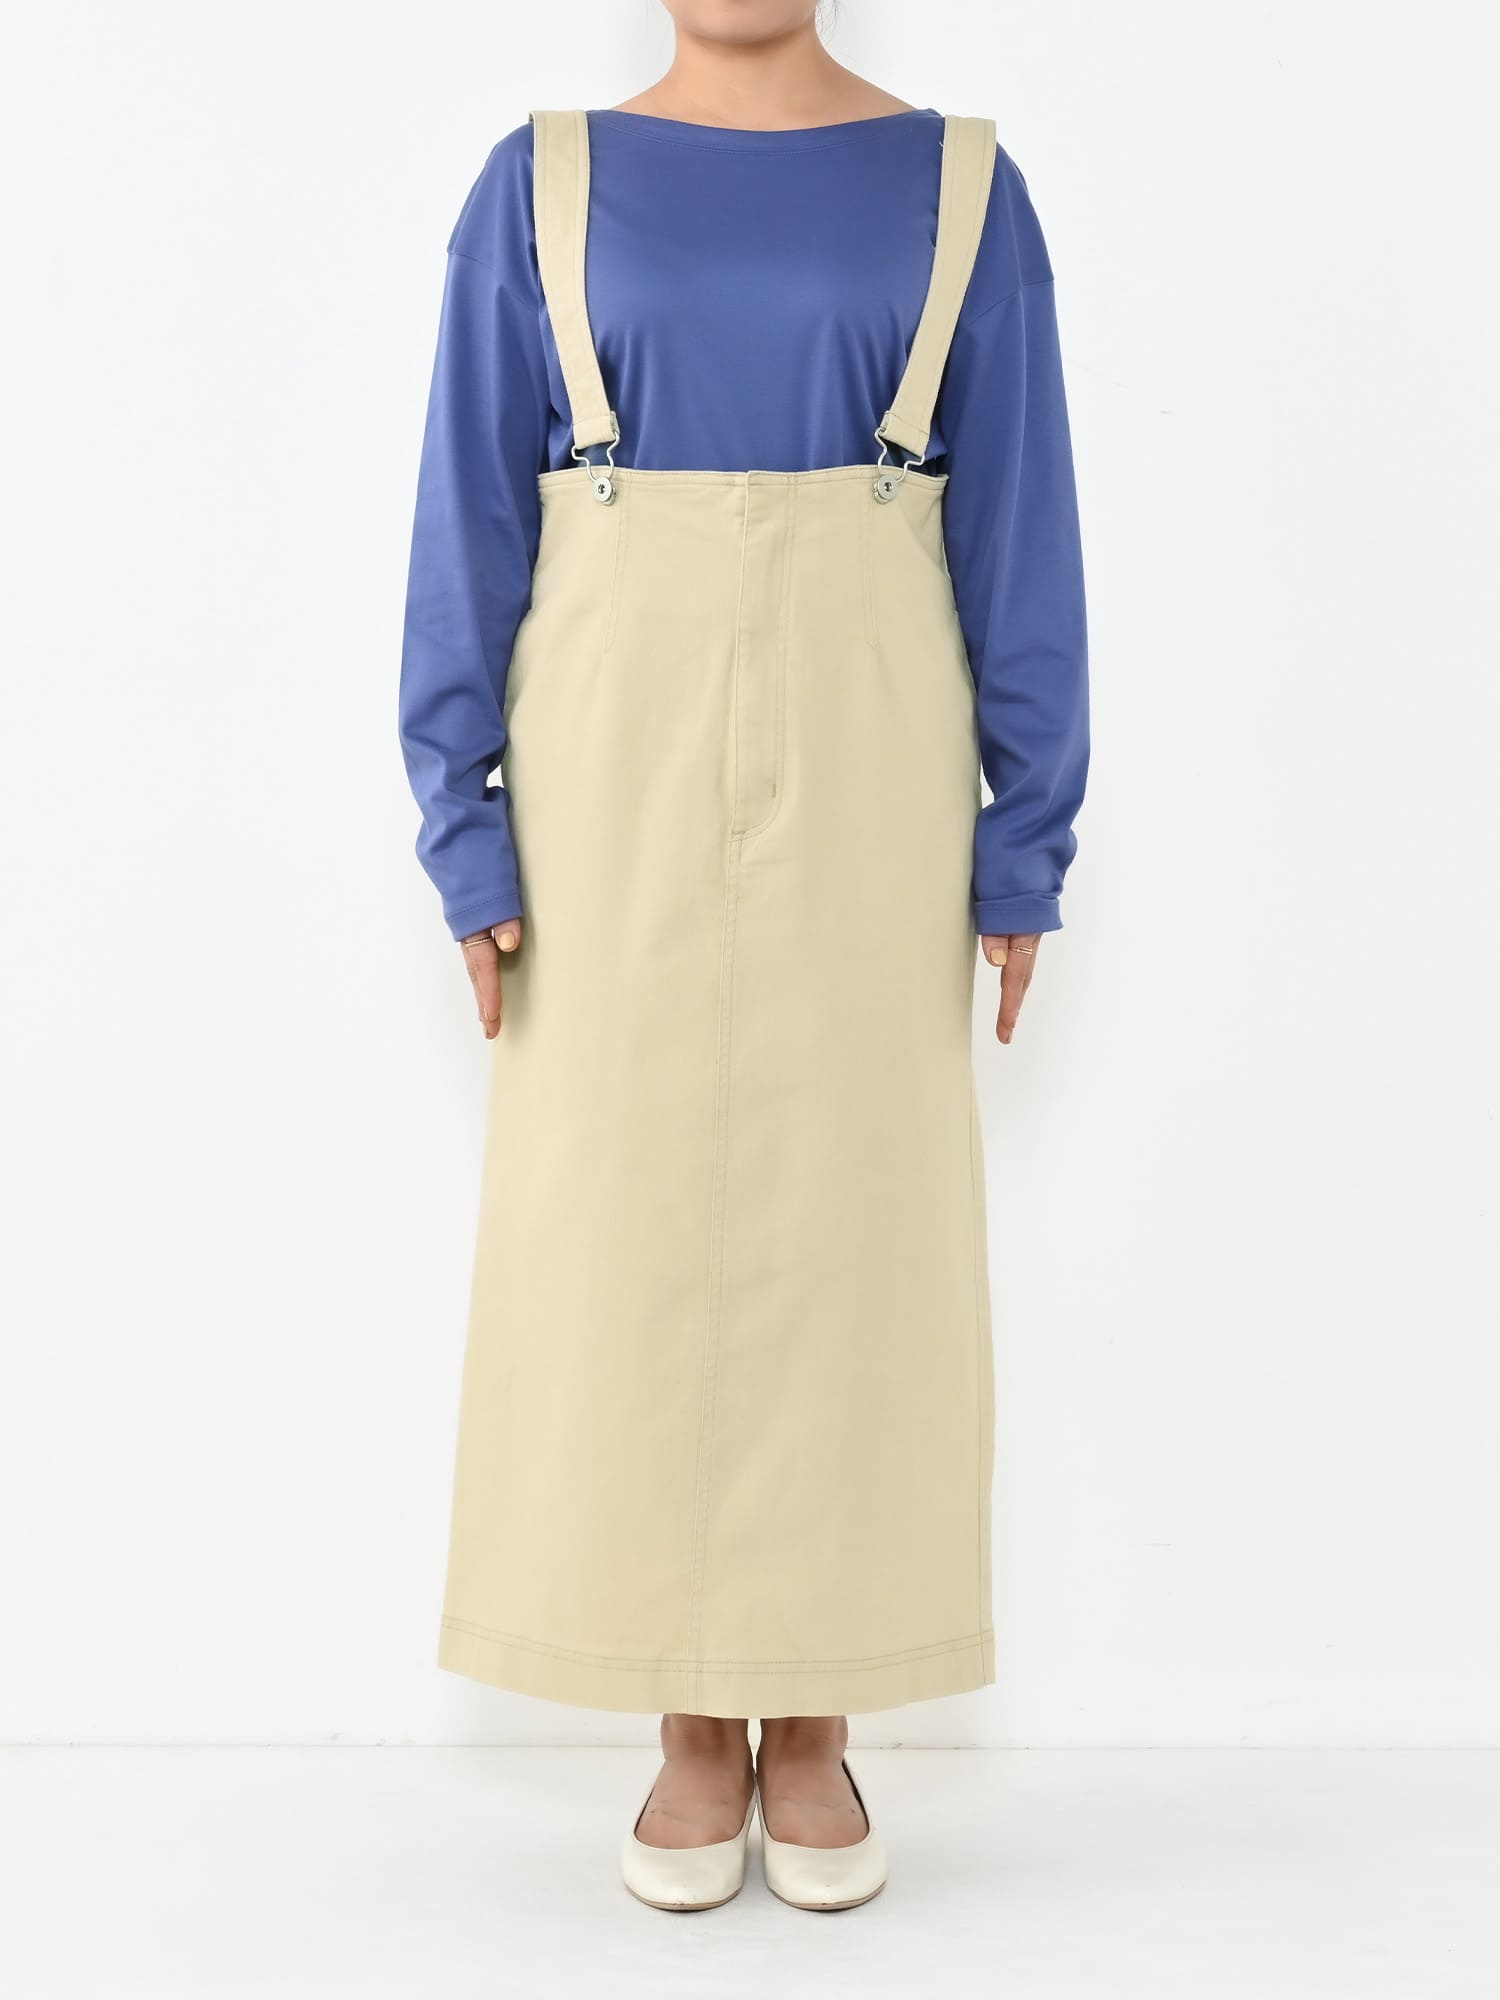 Iラインチノサロペットスカート | 小柄・低身長女性向けファッション 